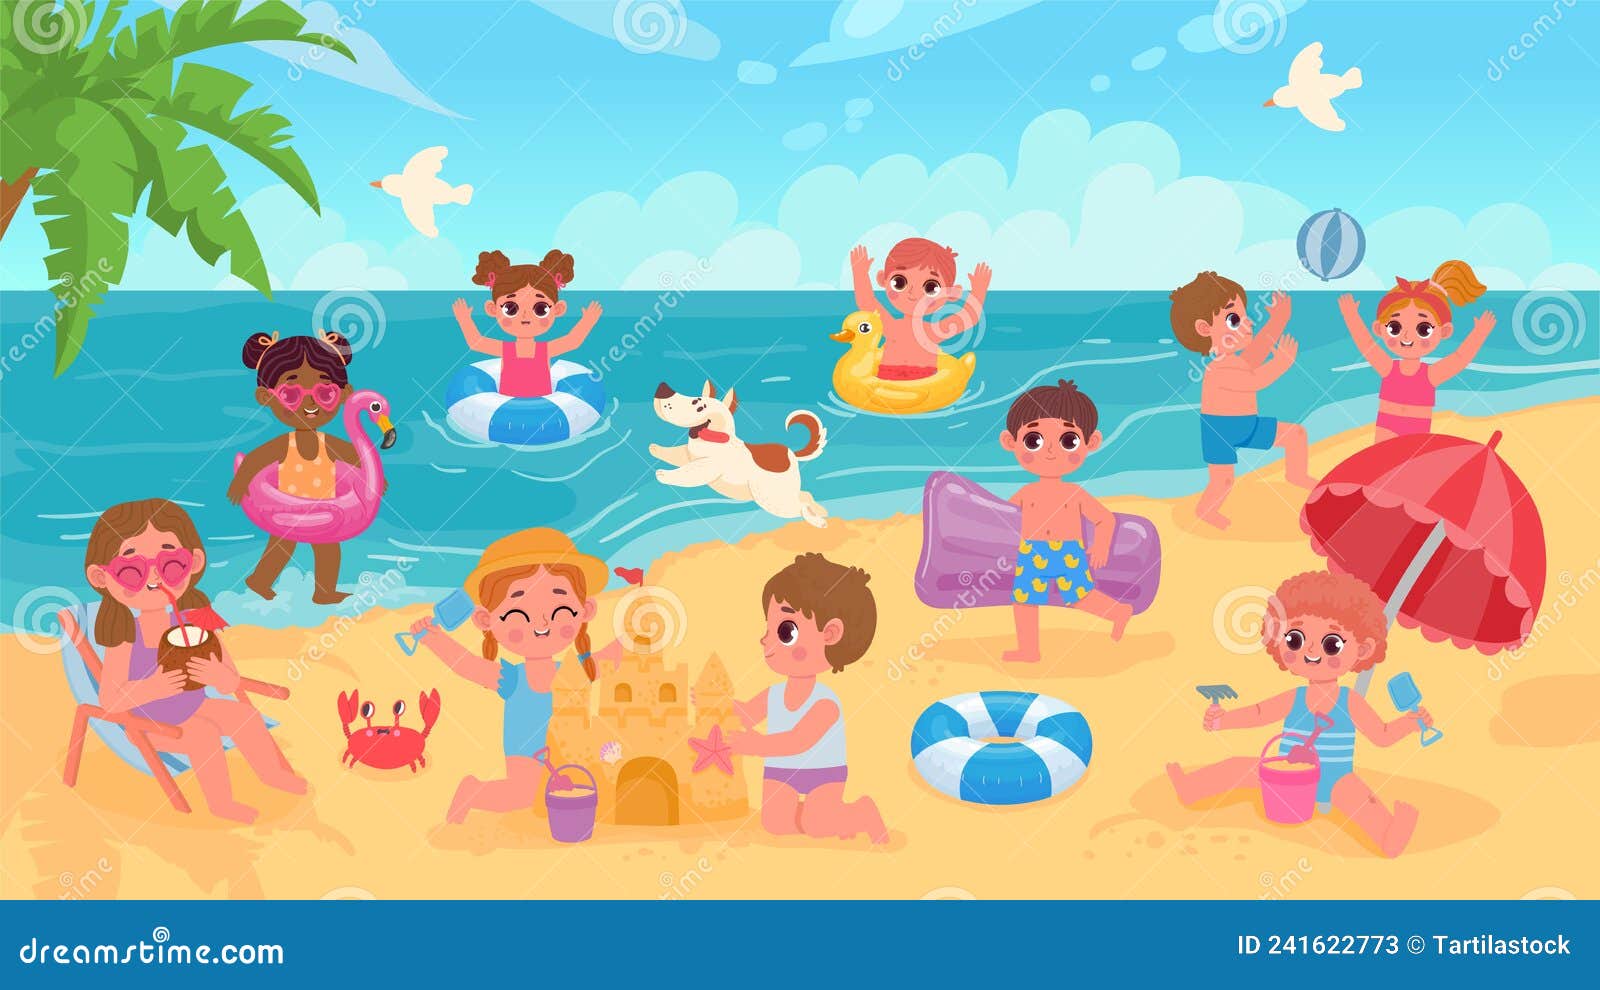 https://thumbs.dreamstime.com/z/summer-beach-landscape-kids-swimming-playing-ball-children-sea-rubber-rings-cartoon-seaside-vacation-vector-concept-241622773.jpg